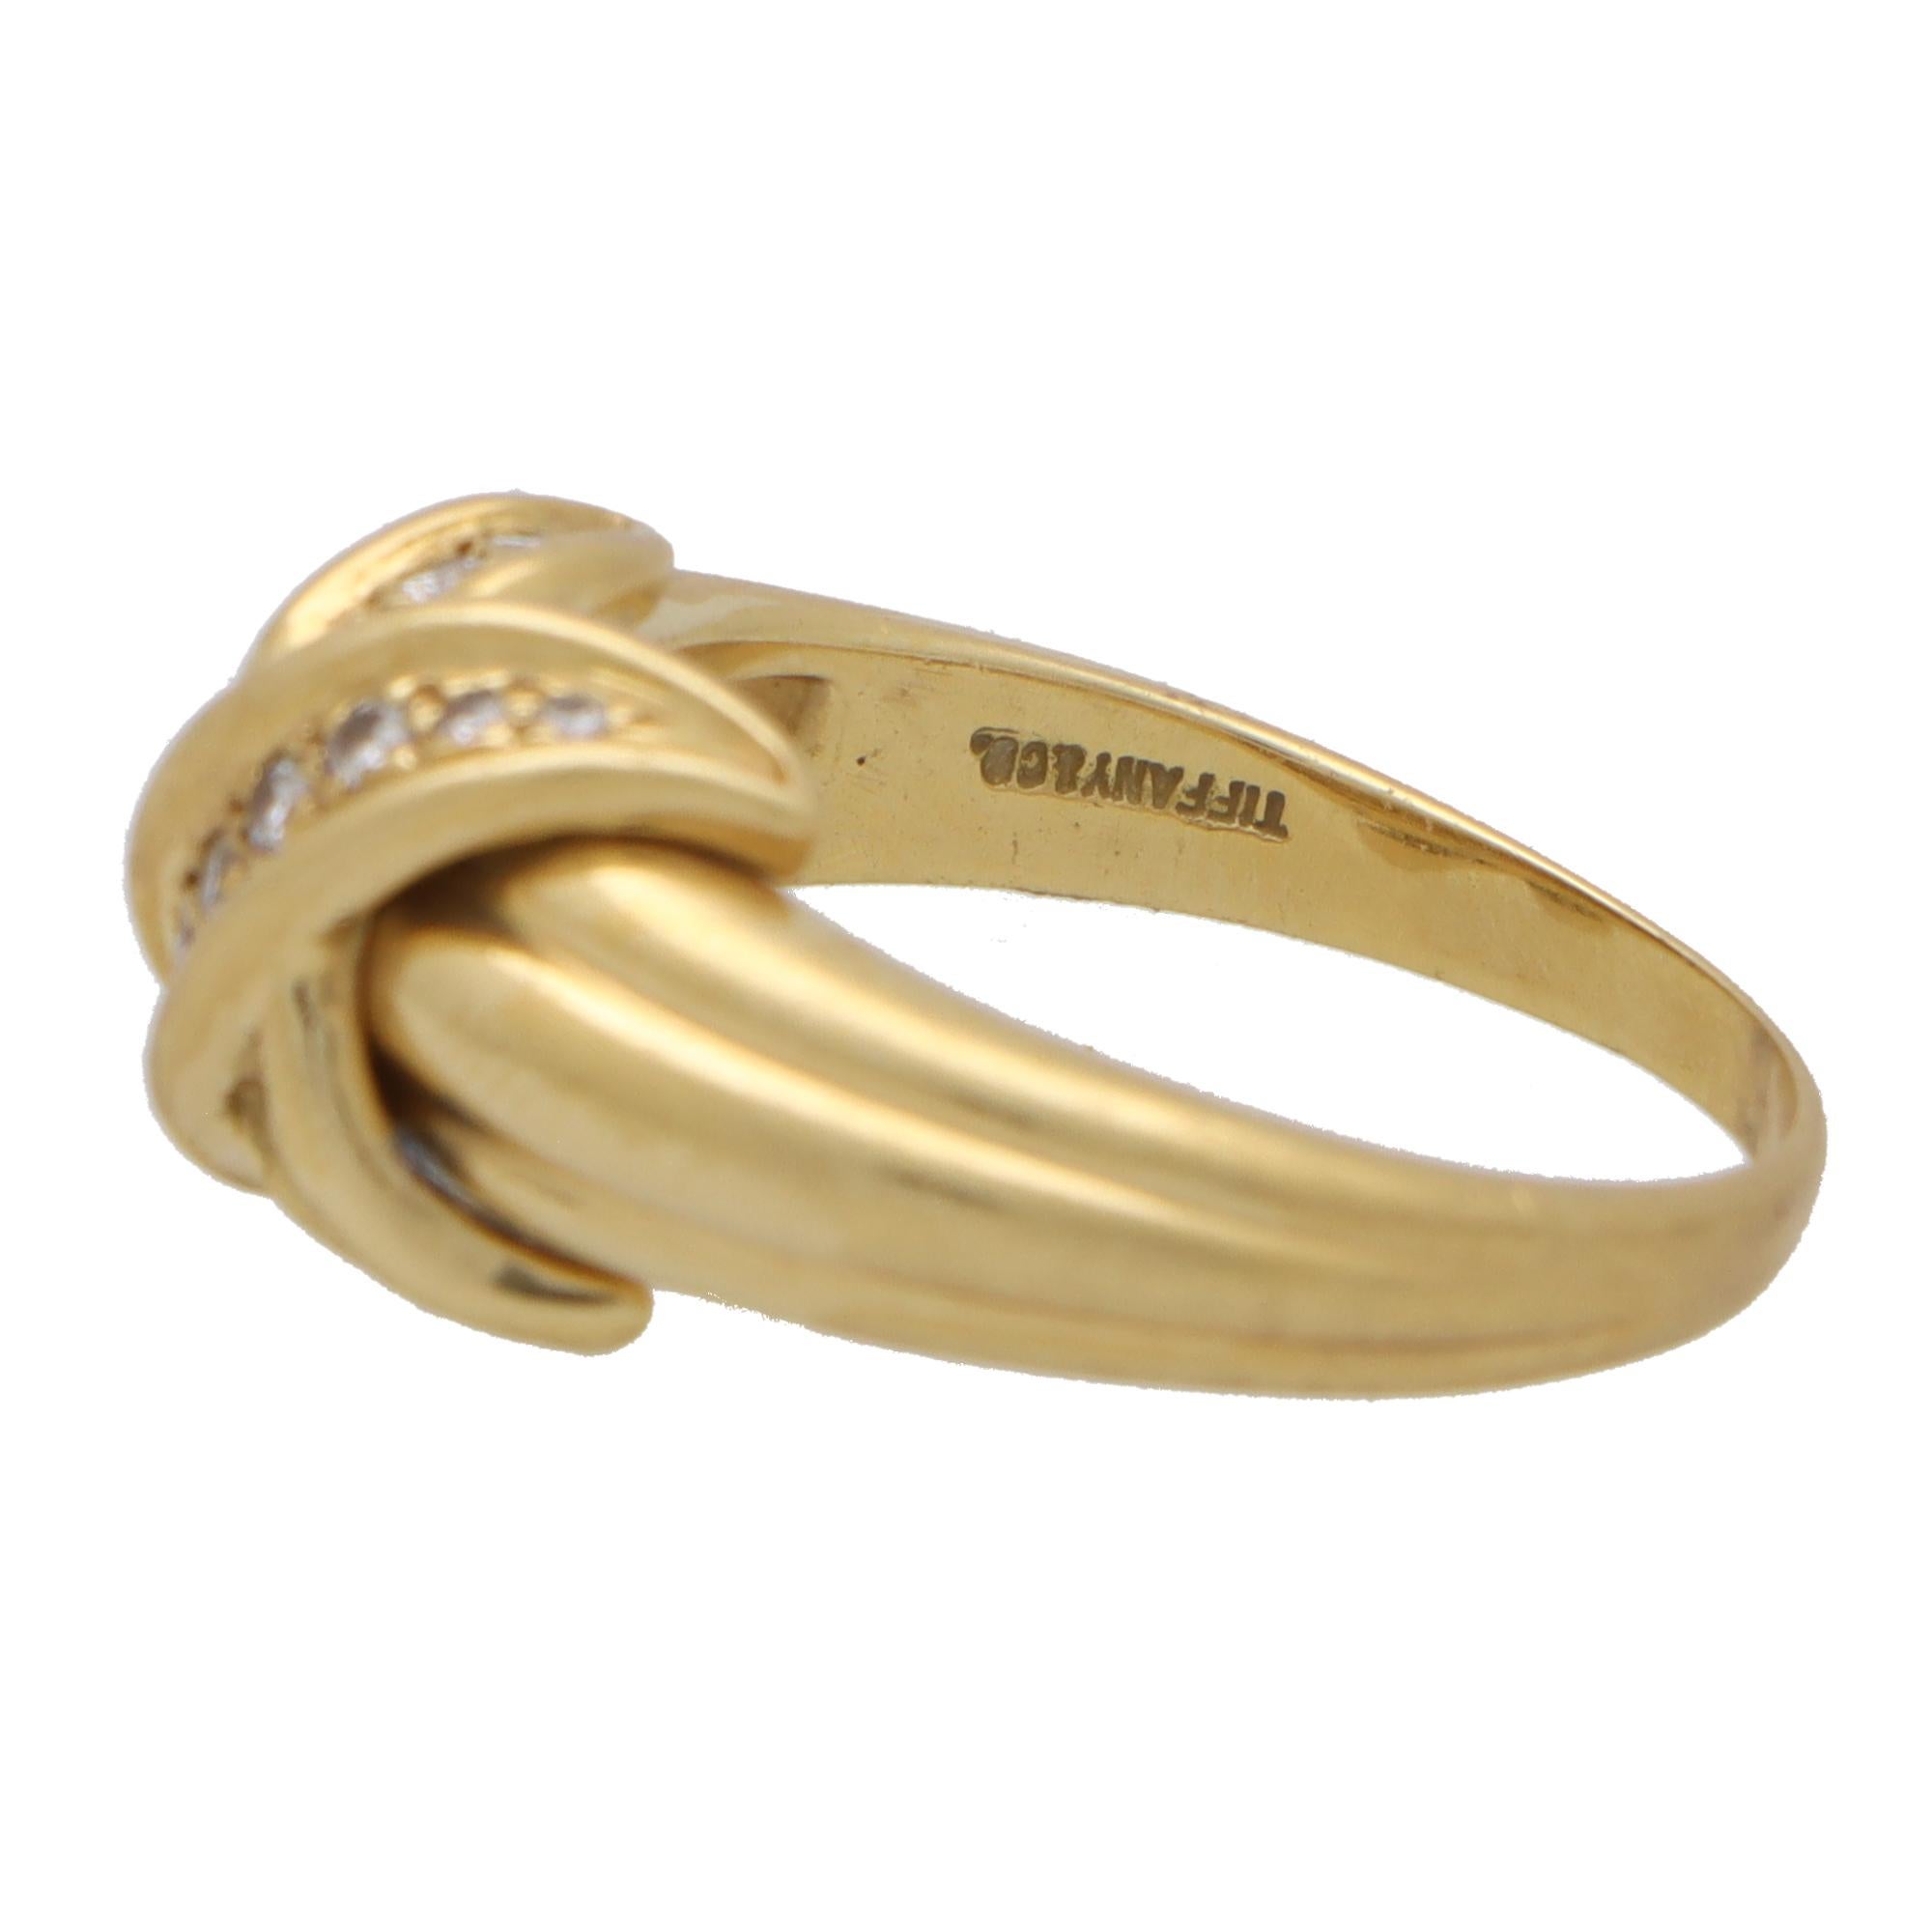 Retro Vintage Tiffany & Co. 'X' Signature Diamond Ring Set in 18k Yellow Gold